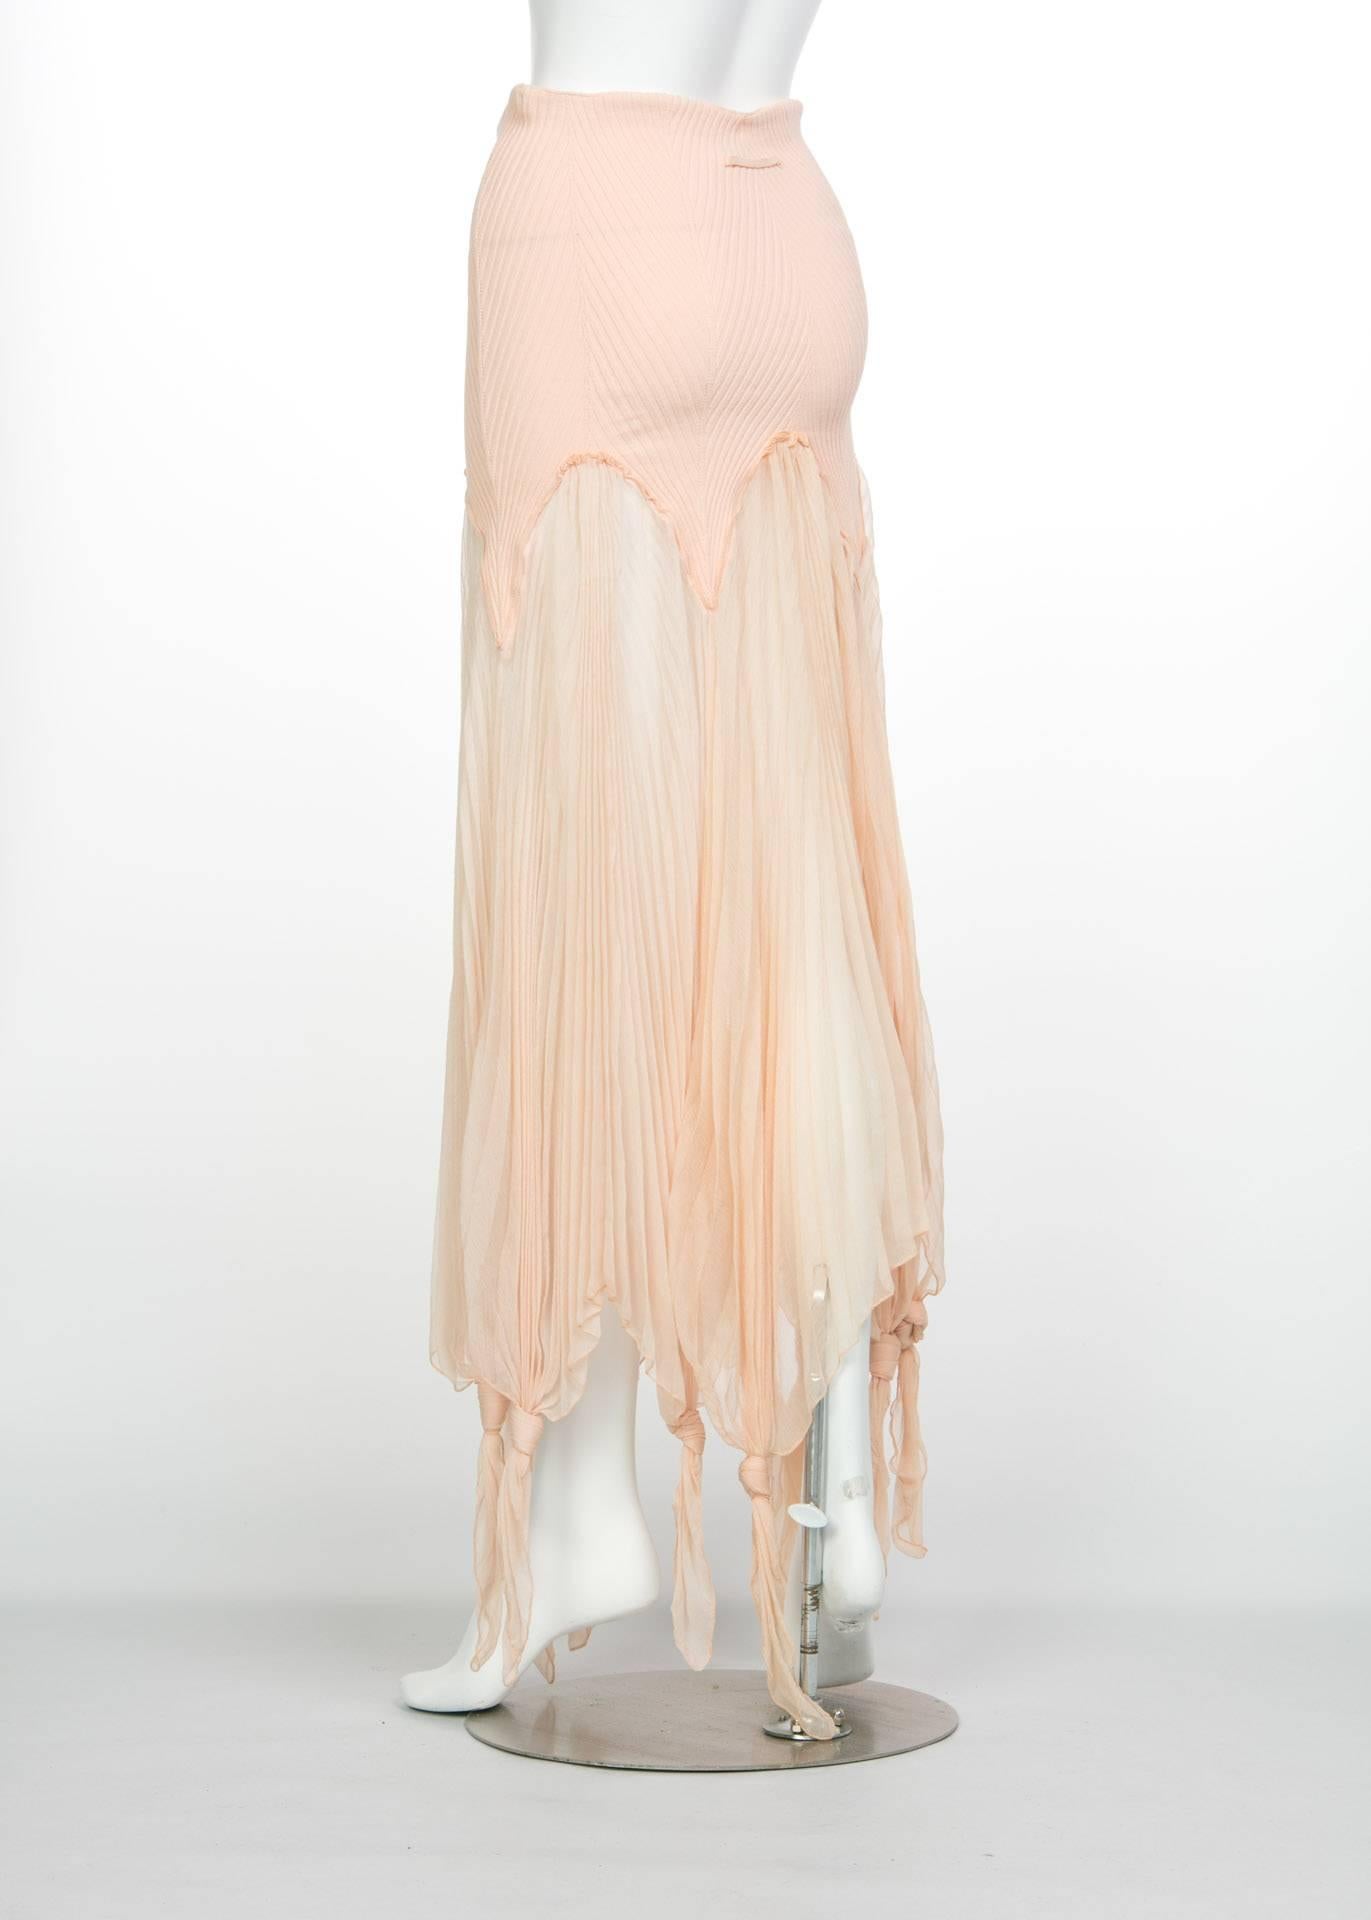 White Jean Paul Gaultier Blush Crinkle Silk Chiffon Rib Knit Yoke Skirt, 2000s For Sale